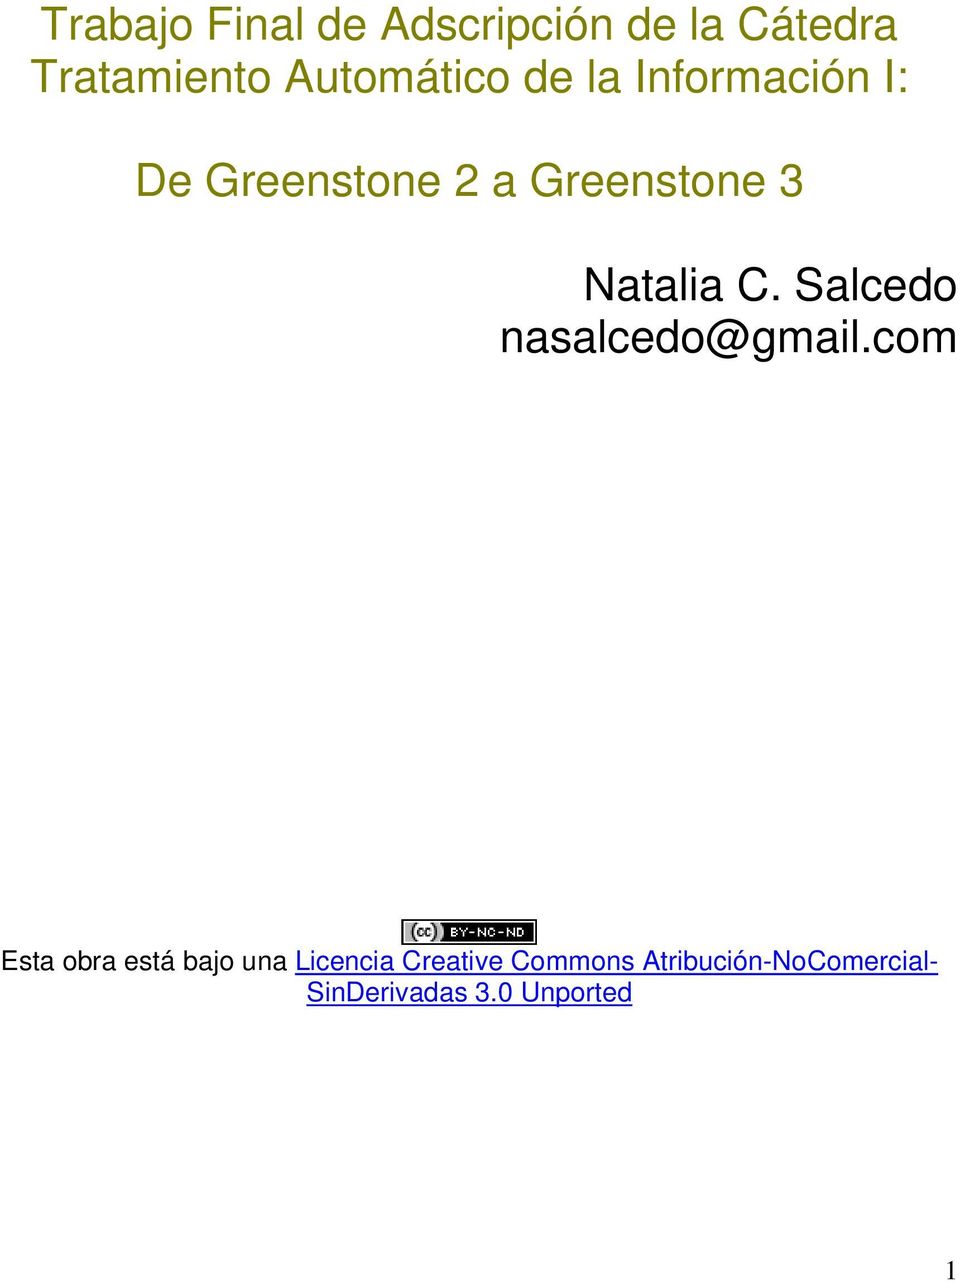 Natalia C. Salcedo nasalcedo@gmail.